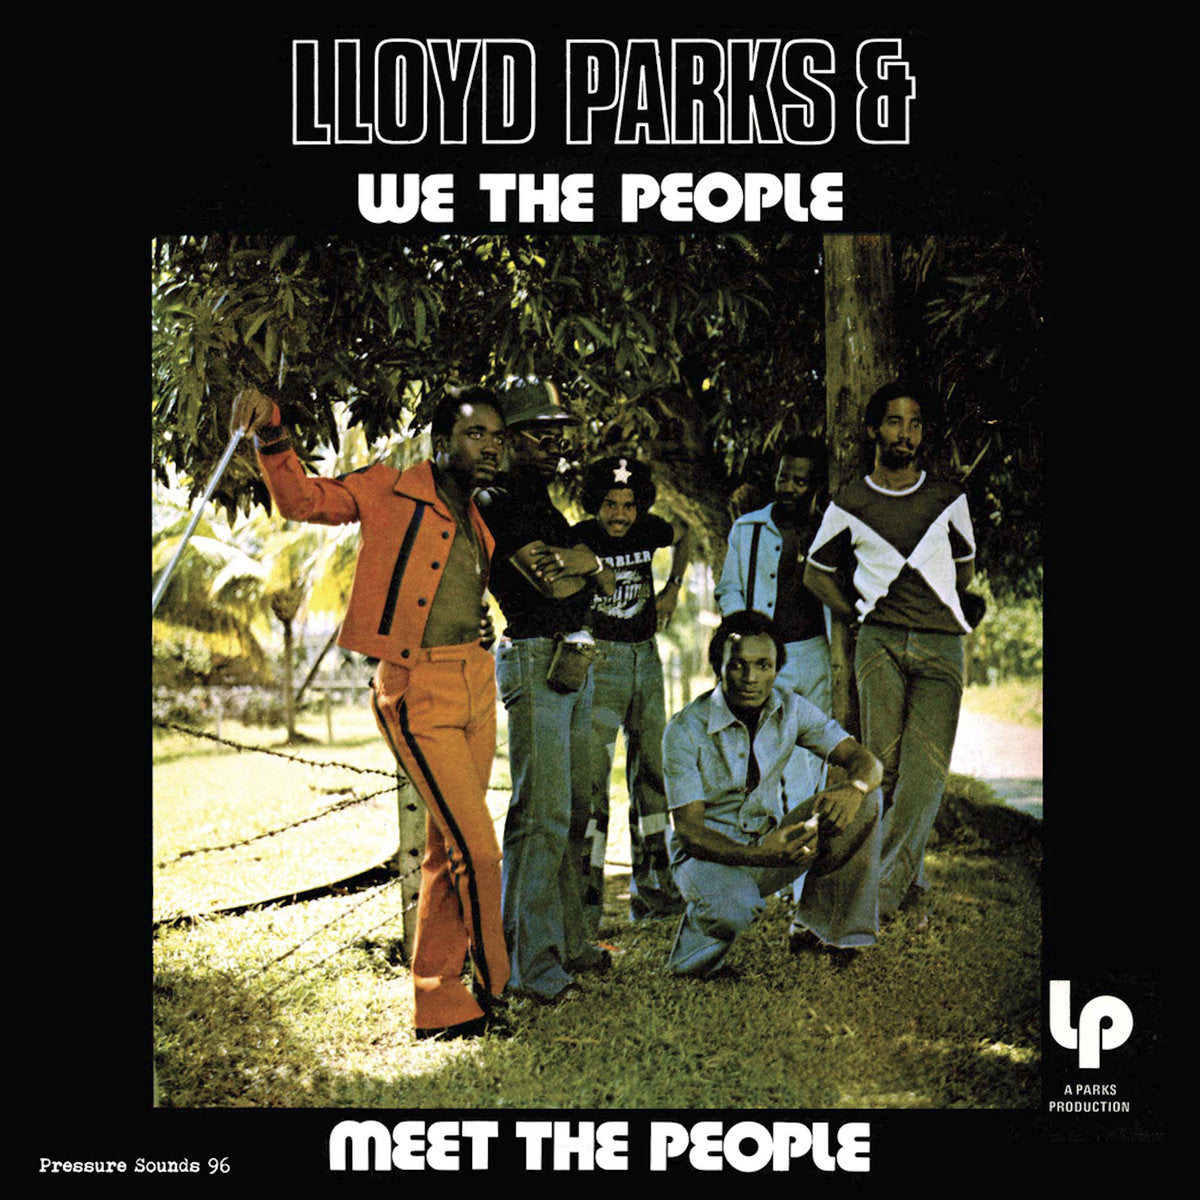 Lloyd Parks & We The People - Meet the People LP